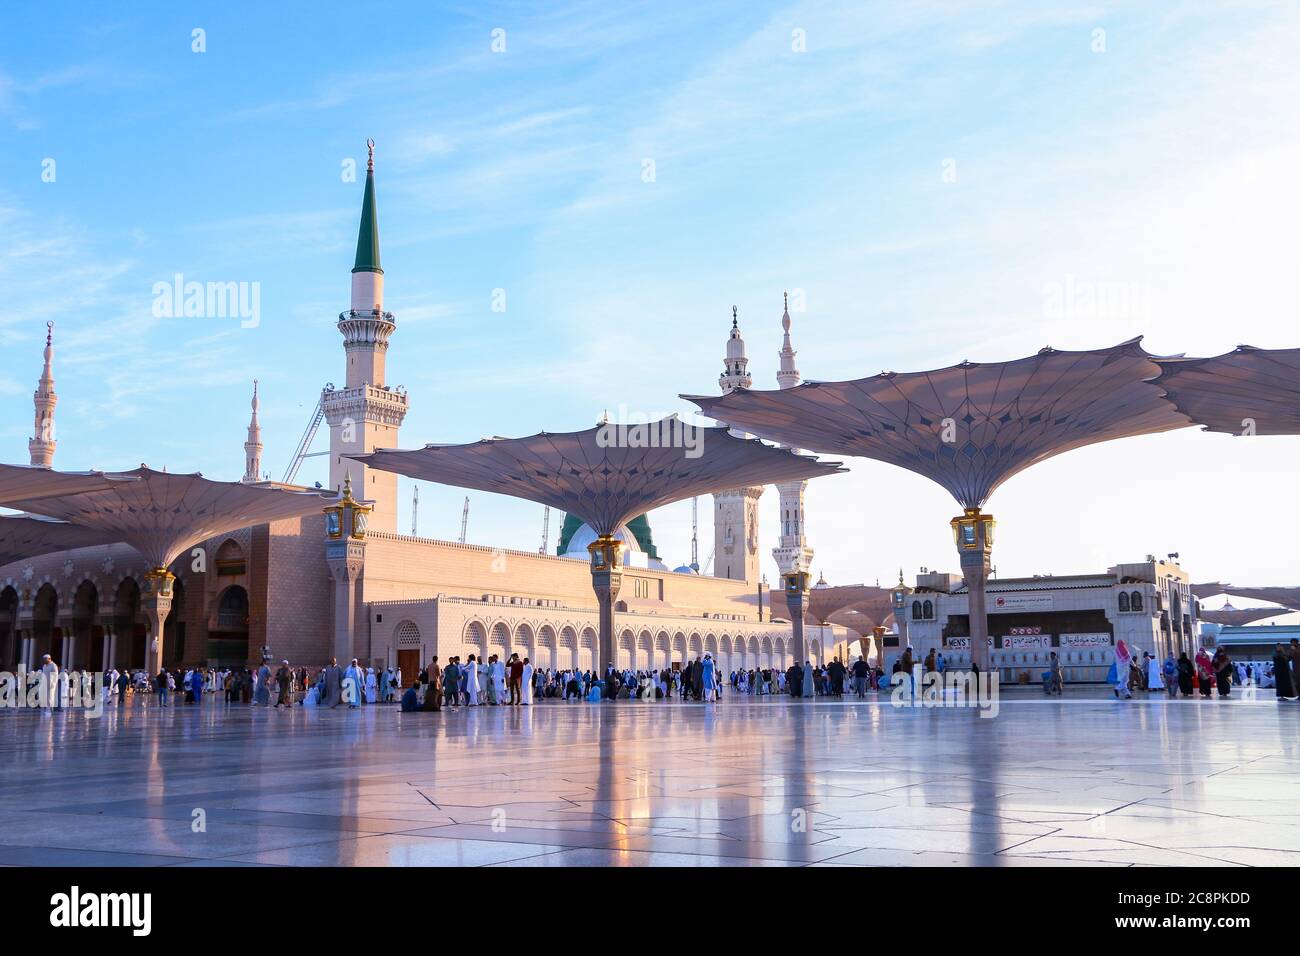 Medina / Saudi Arabia - 13 Dec 2019: Prophet Mohammed Mosque - Al Masjid an Nabawi - Medina - Saudi Arabia Stock Photo